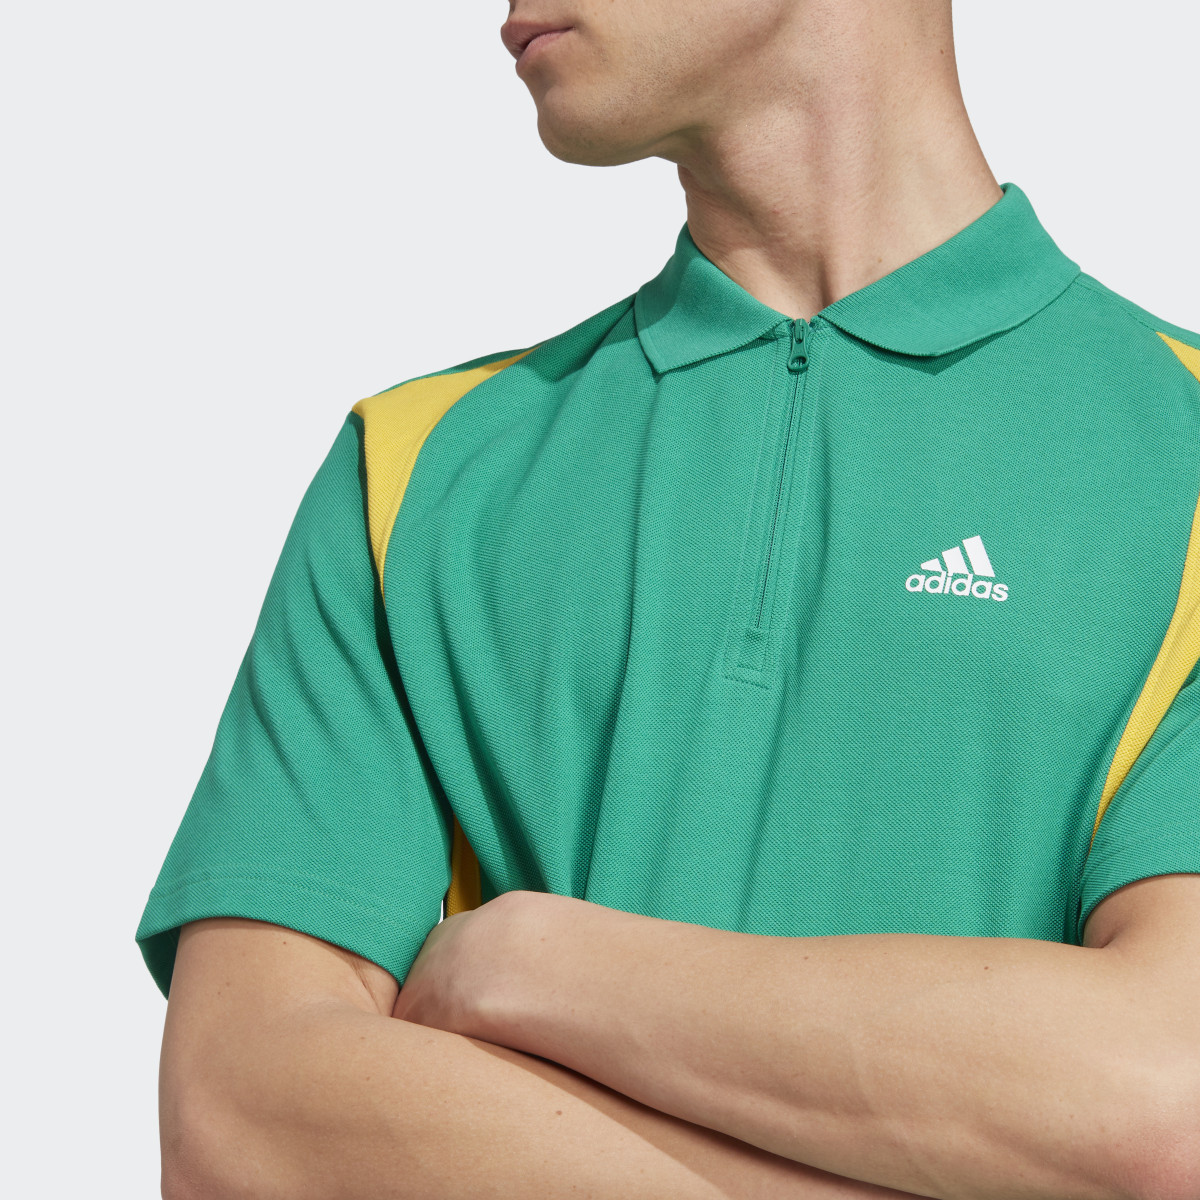 Adidas Colorblock Poloshirt. 6